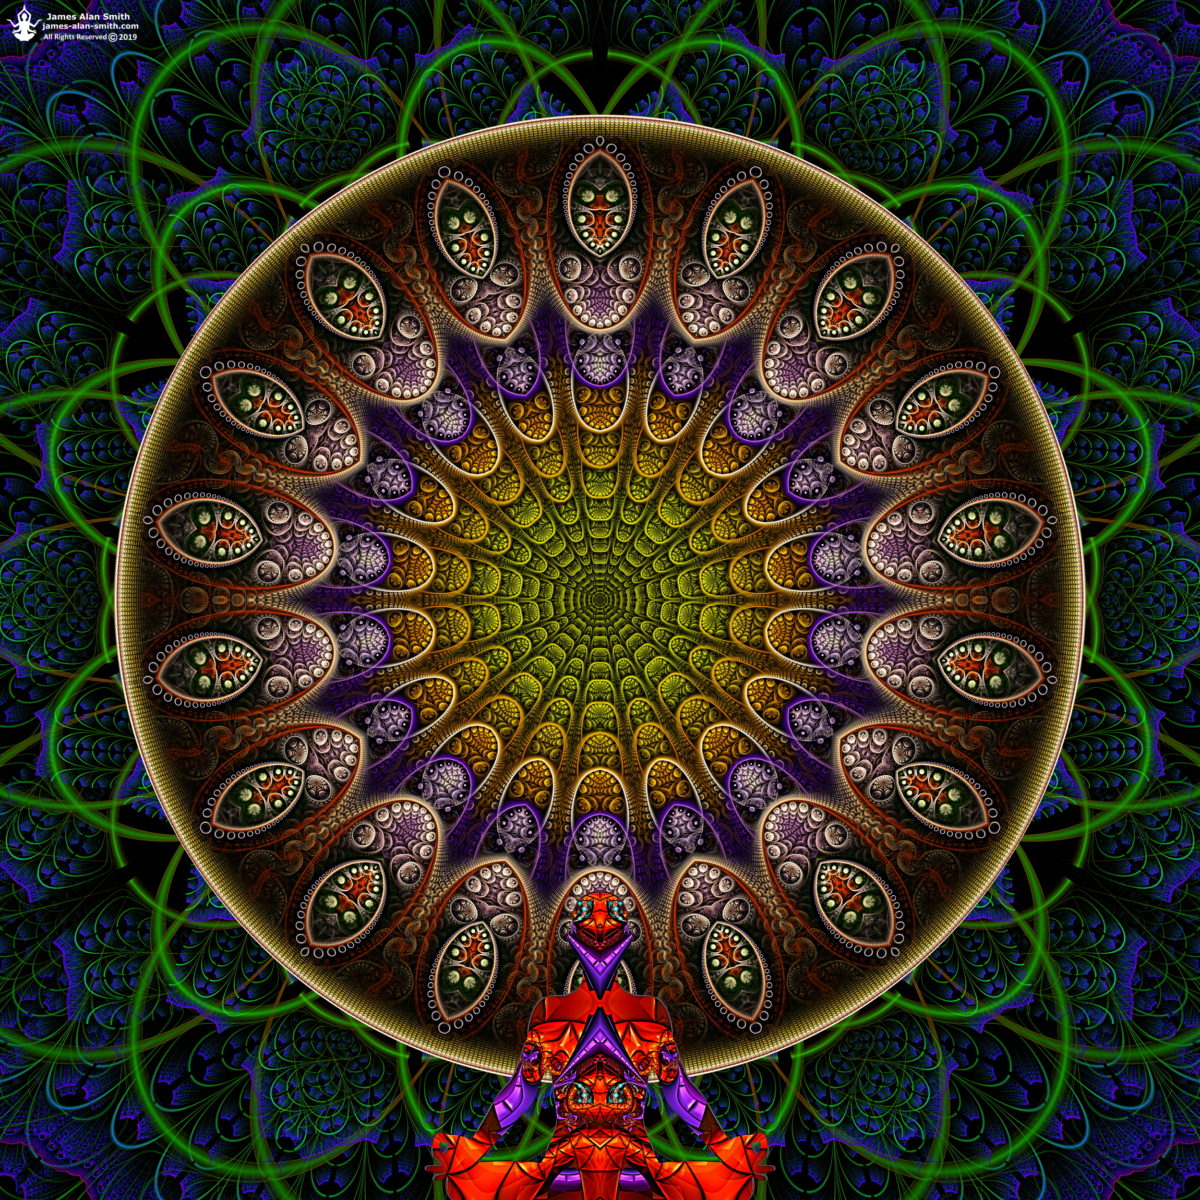 Mandala Meditations: Artwork by James Alan Smith